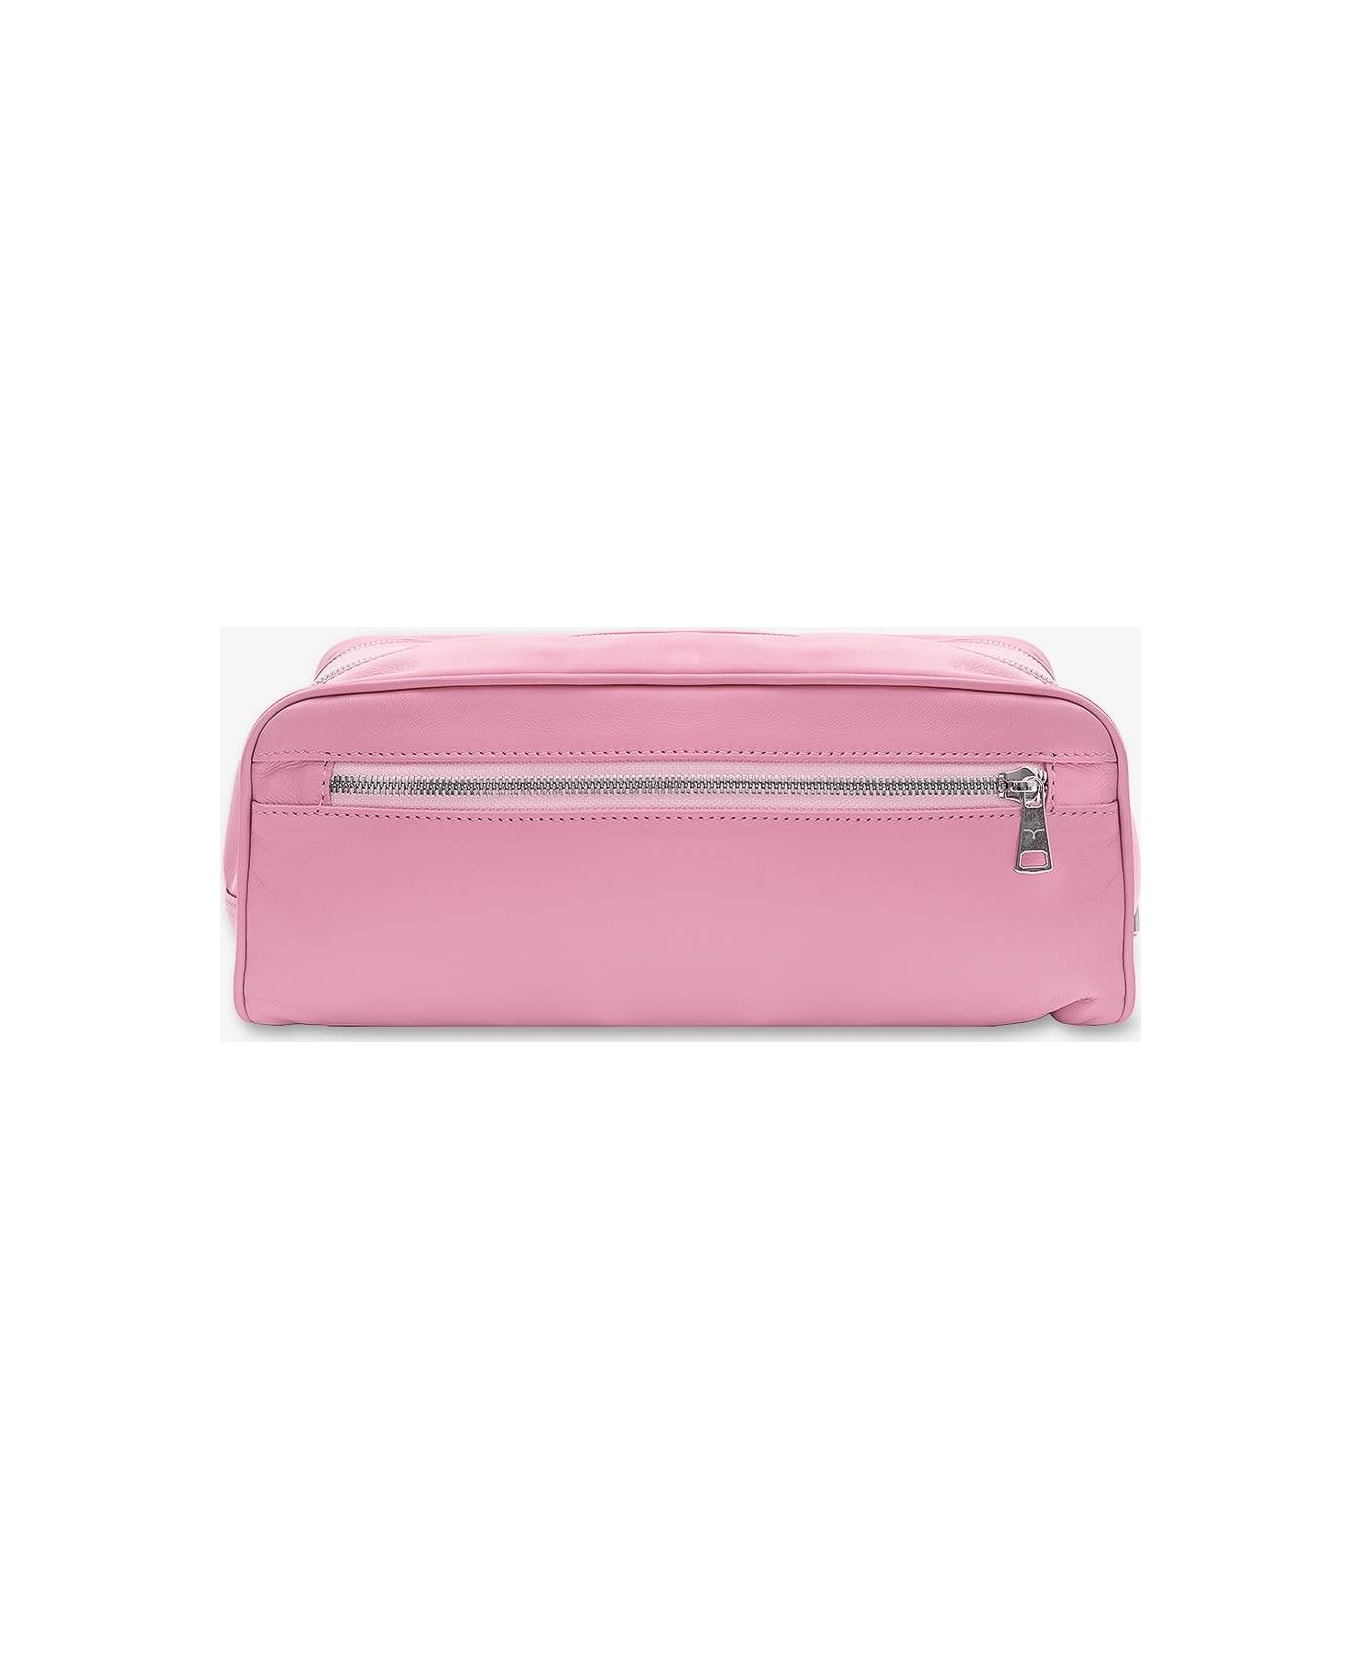 Larusmiani Wash Bag'tzar' Luggage - Pink トラベルバッグ